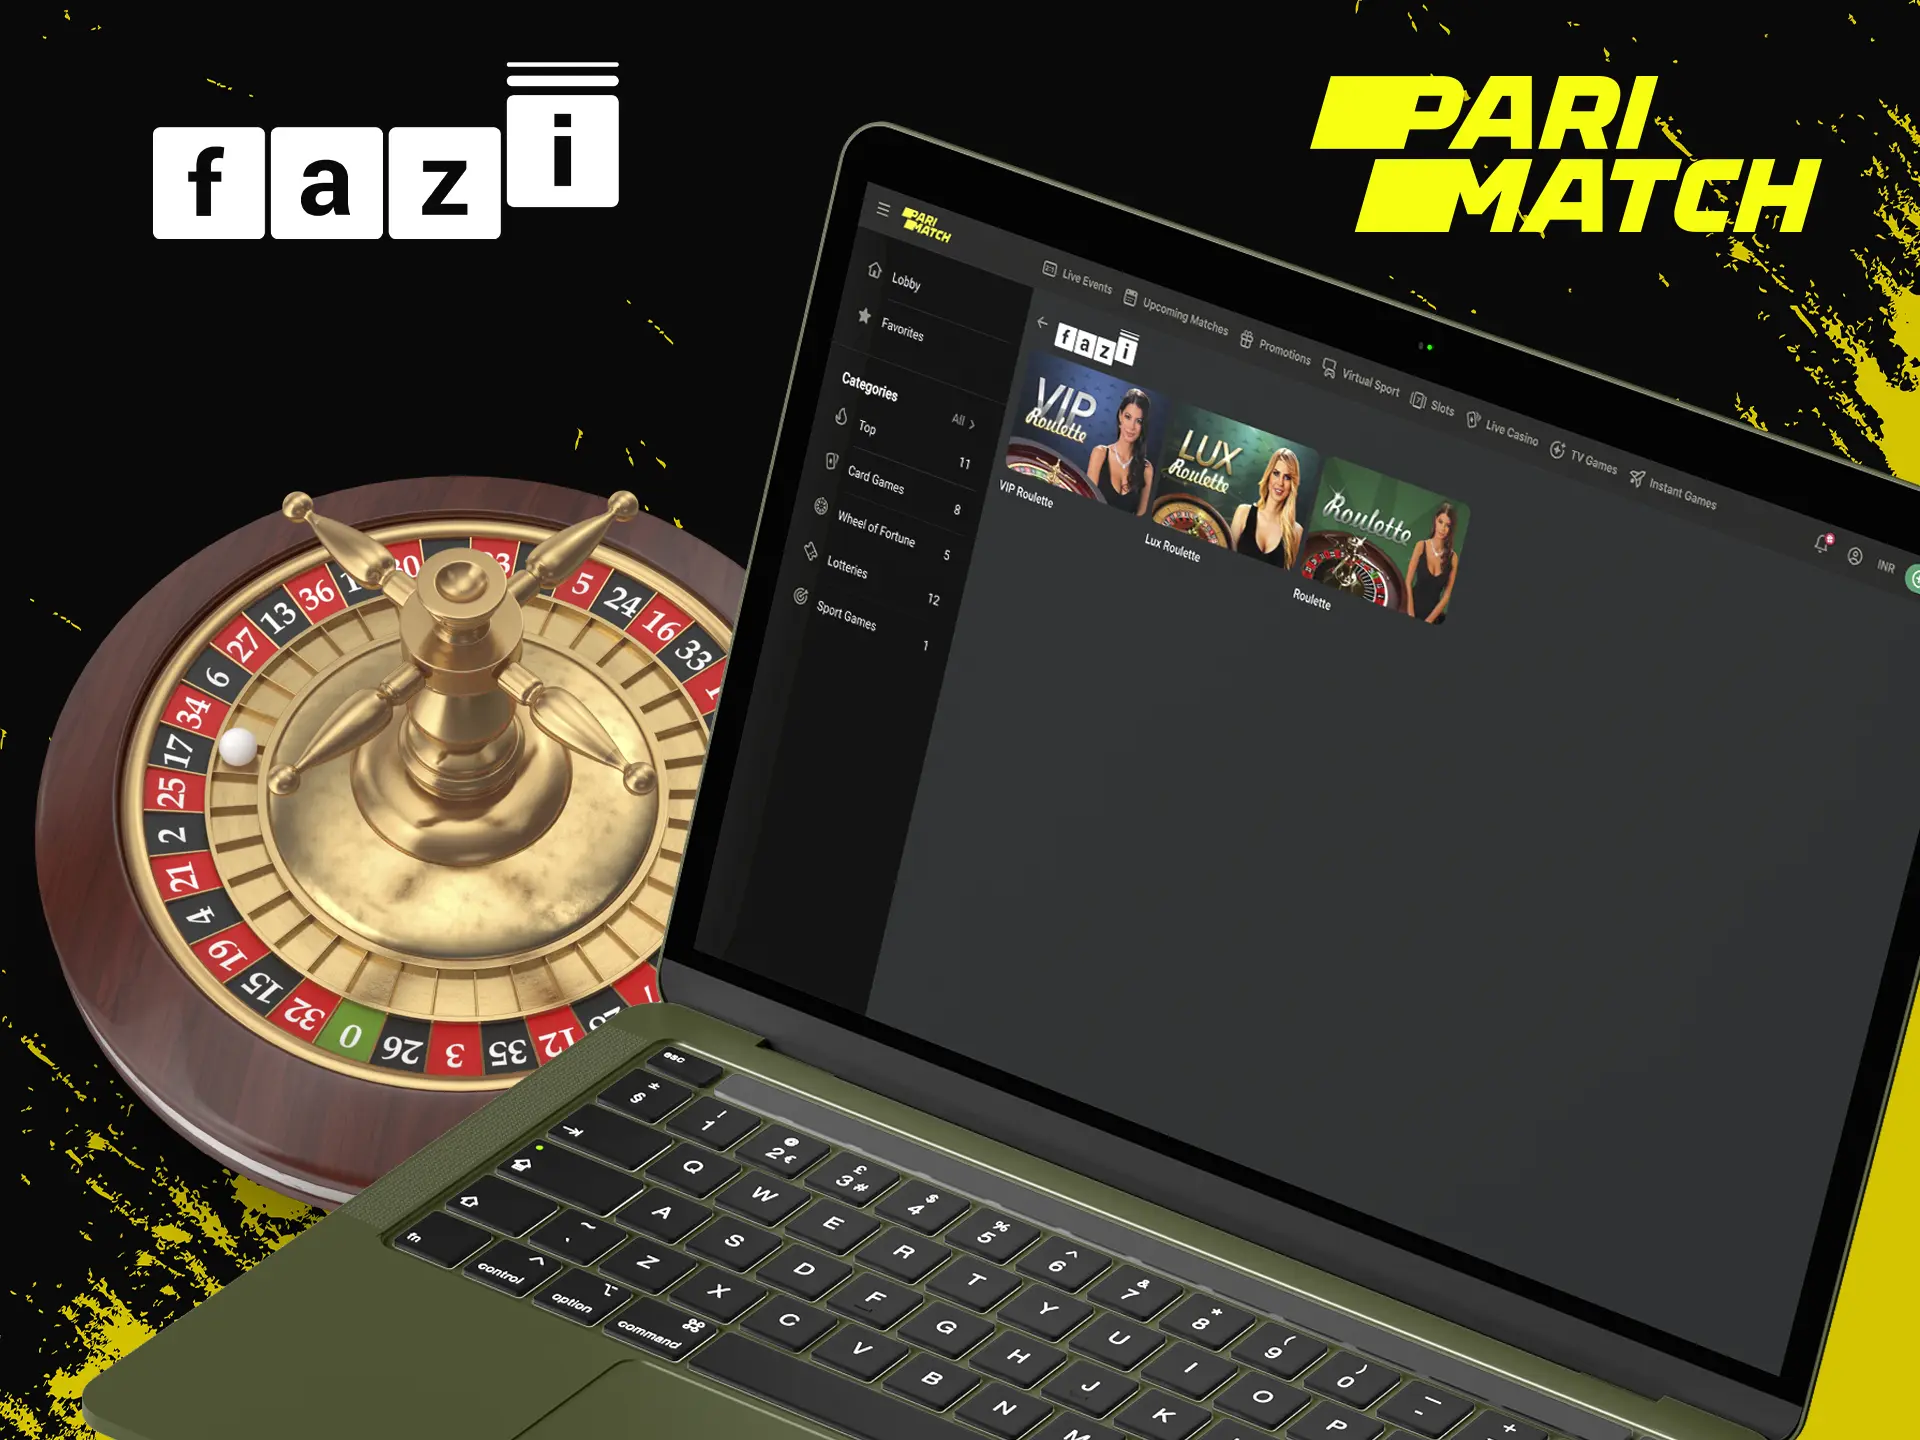 Unique graphics and smooth performance, all in Parimatch Casino's Fazi provider games.